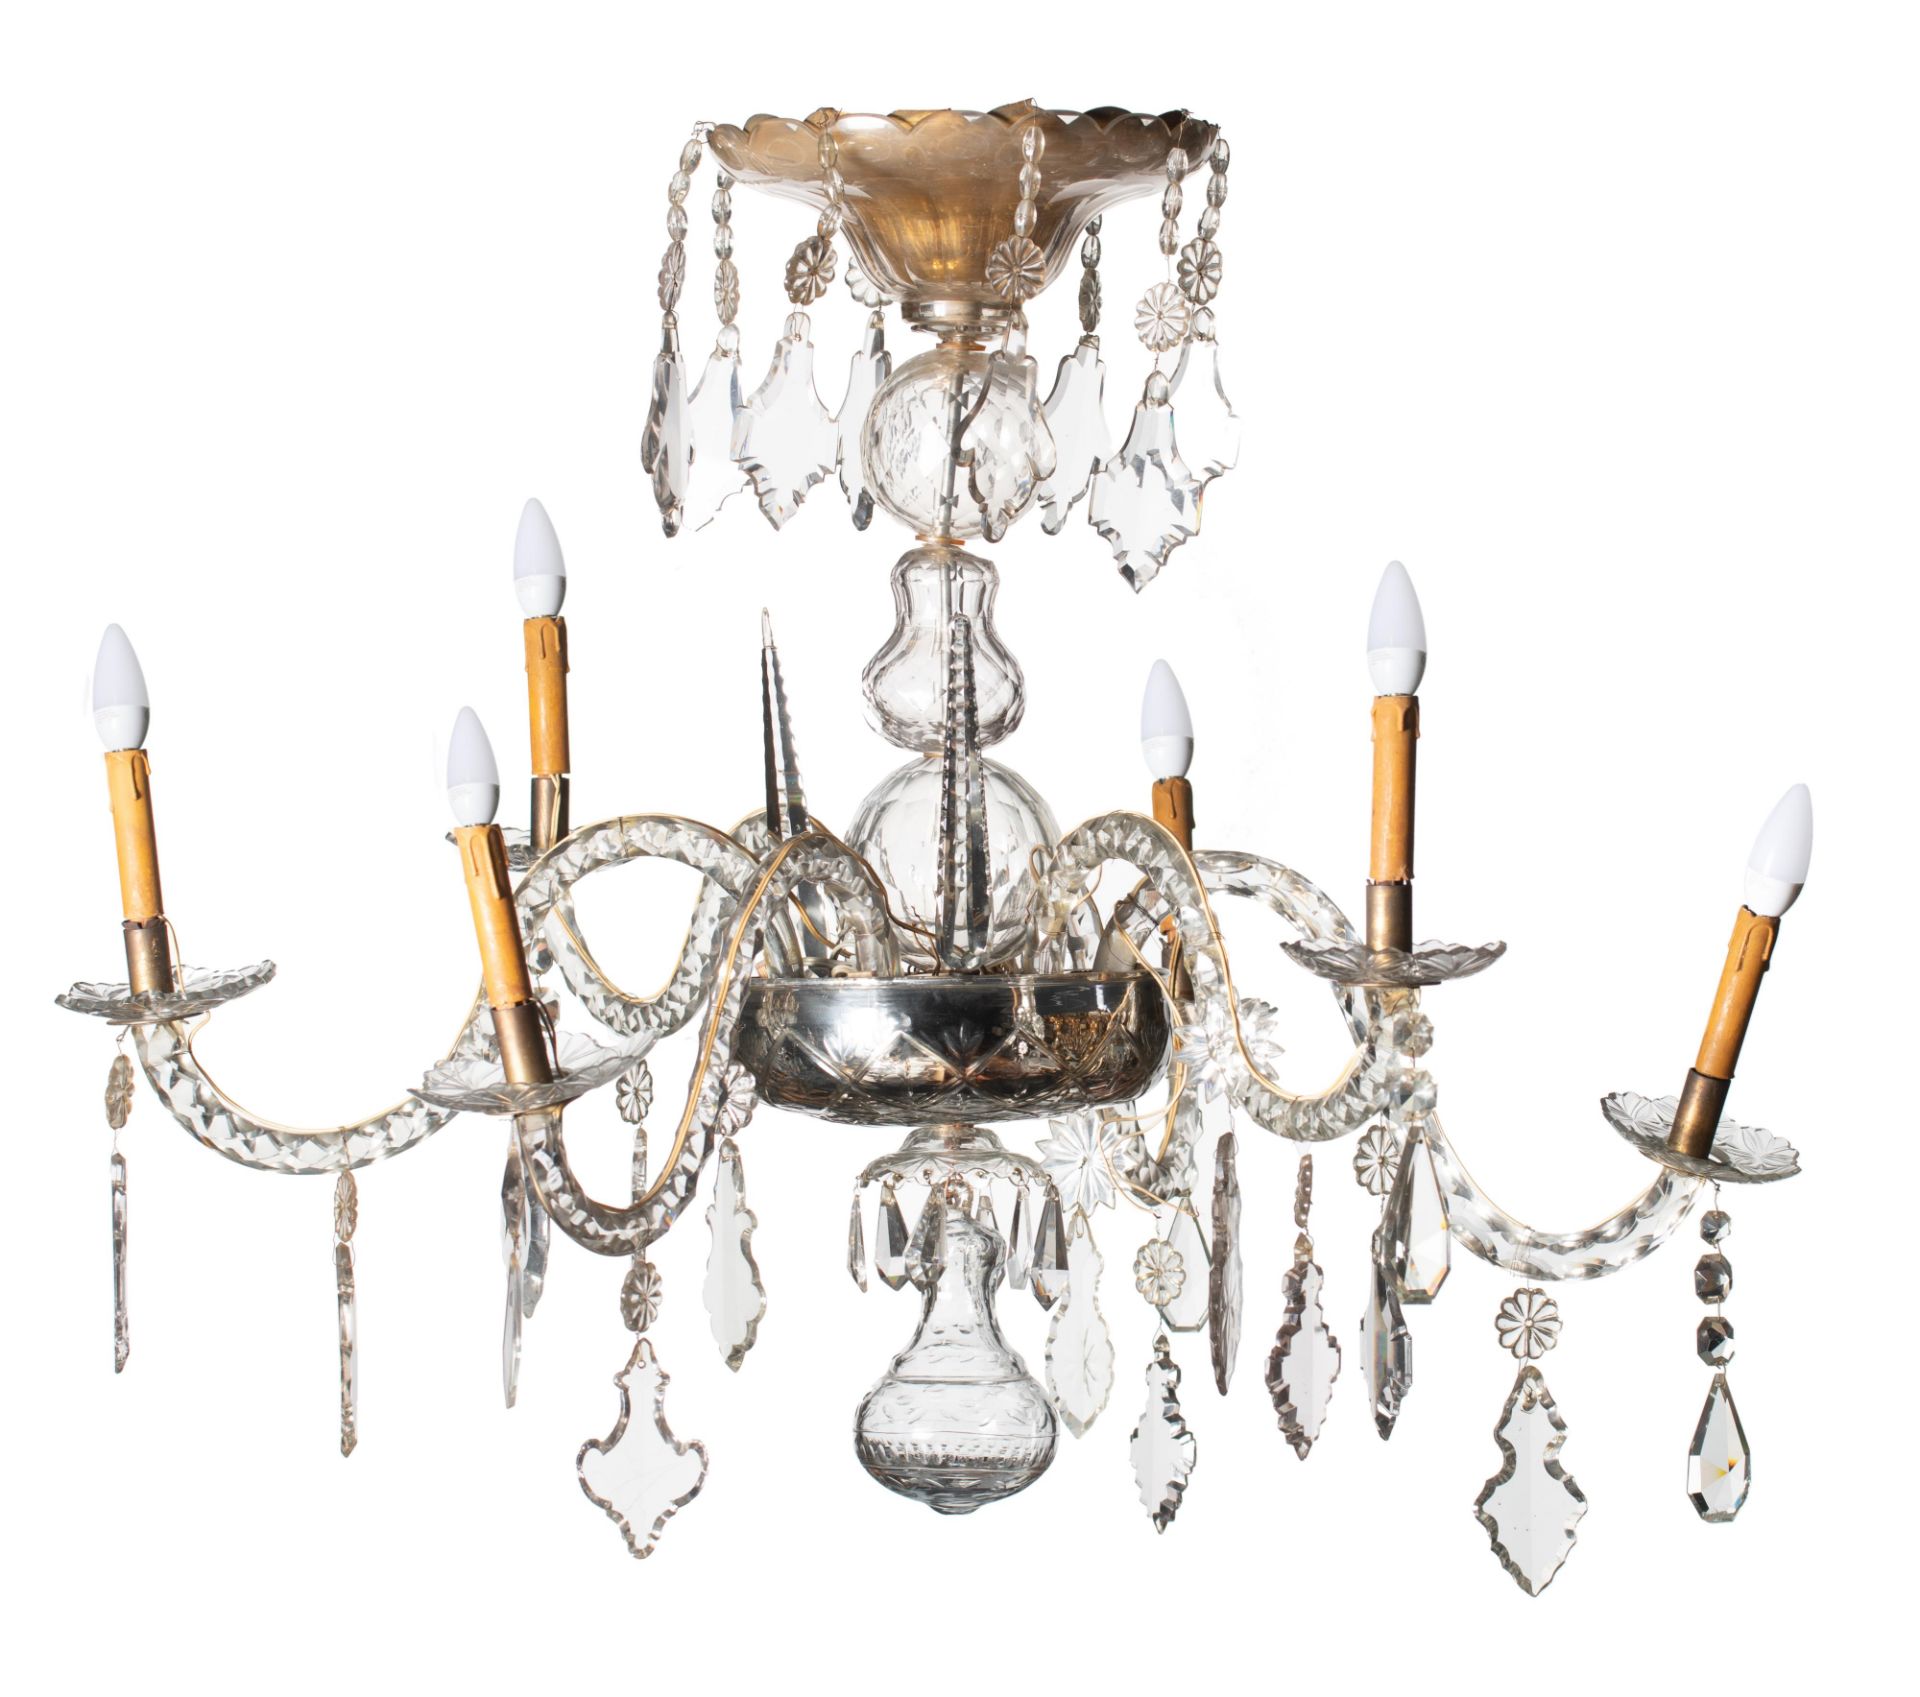 An imposing six-armed Venetian type glass chandelier, H 80 - › 107 cm,